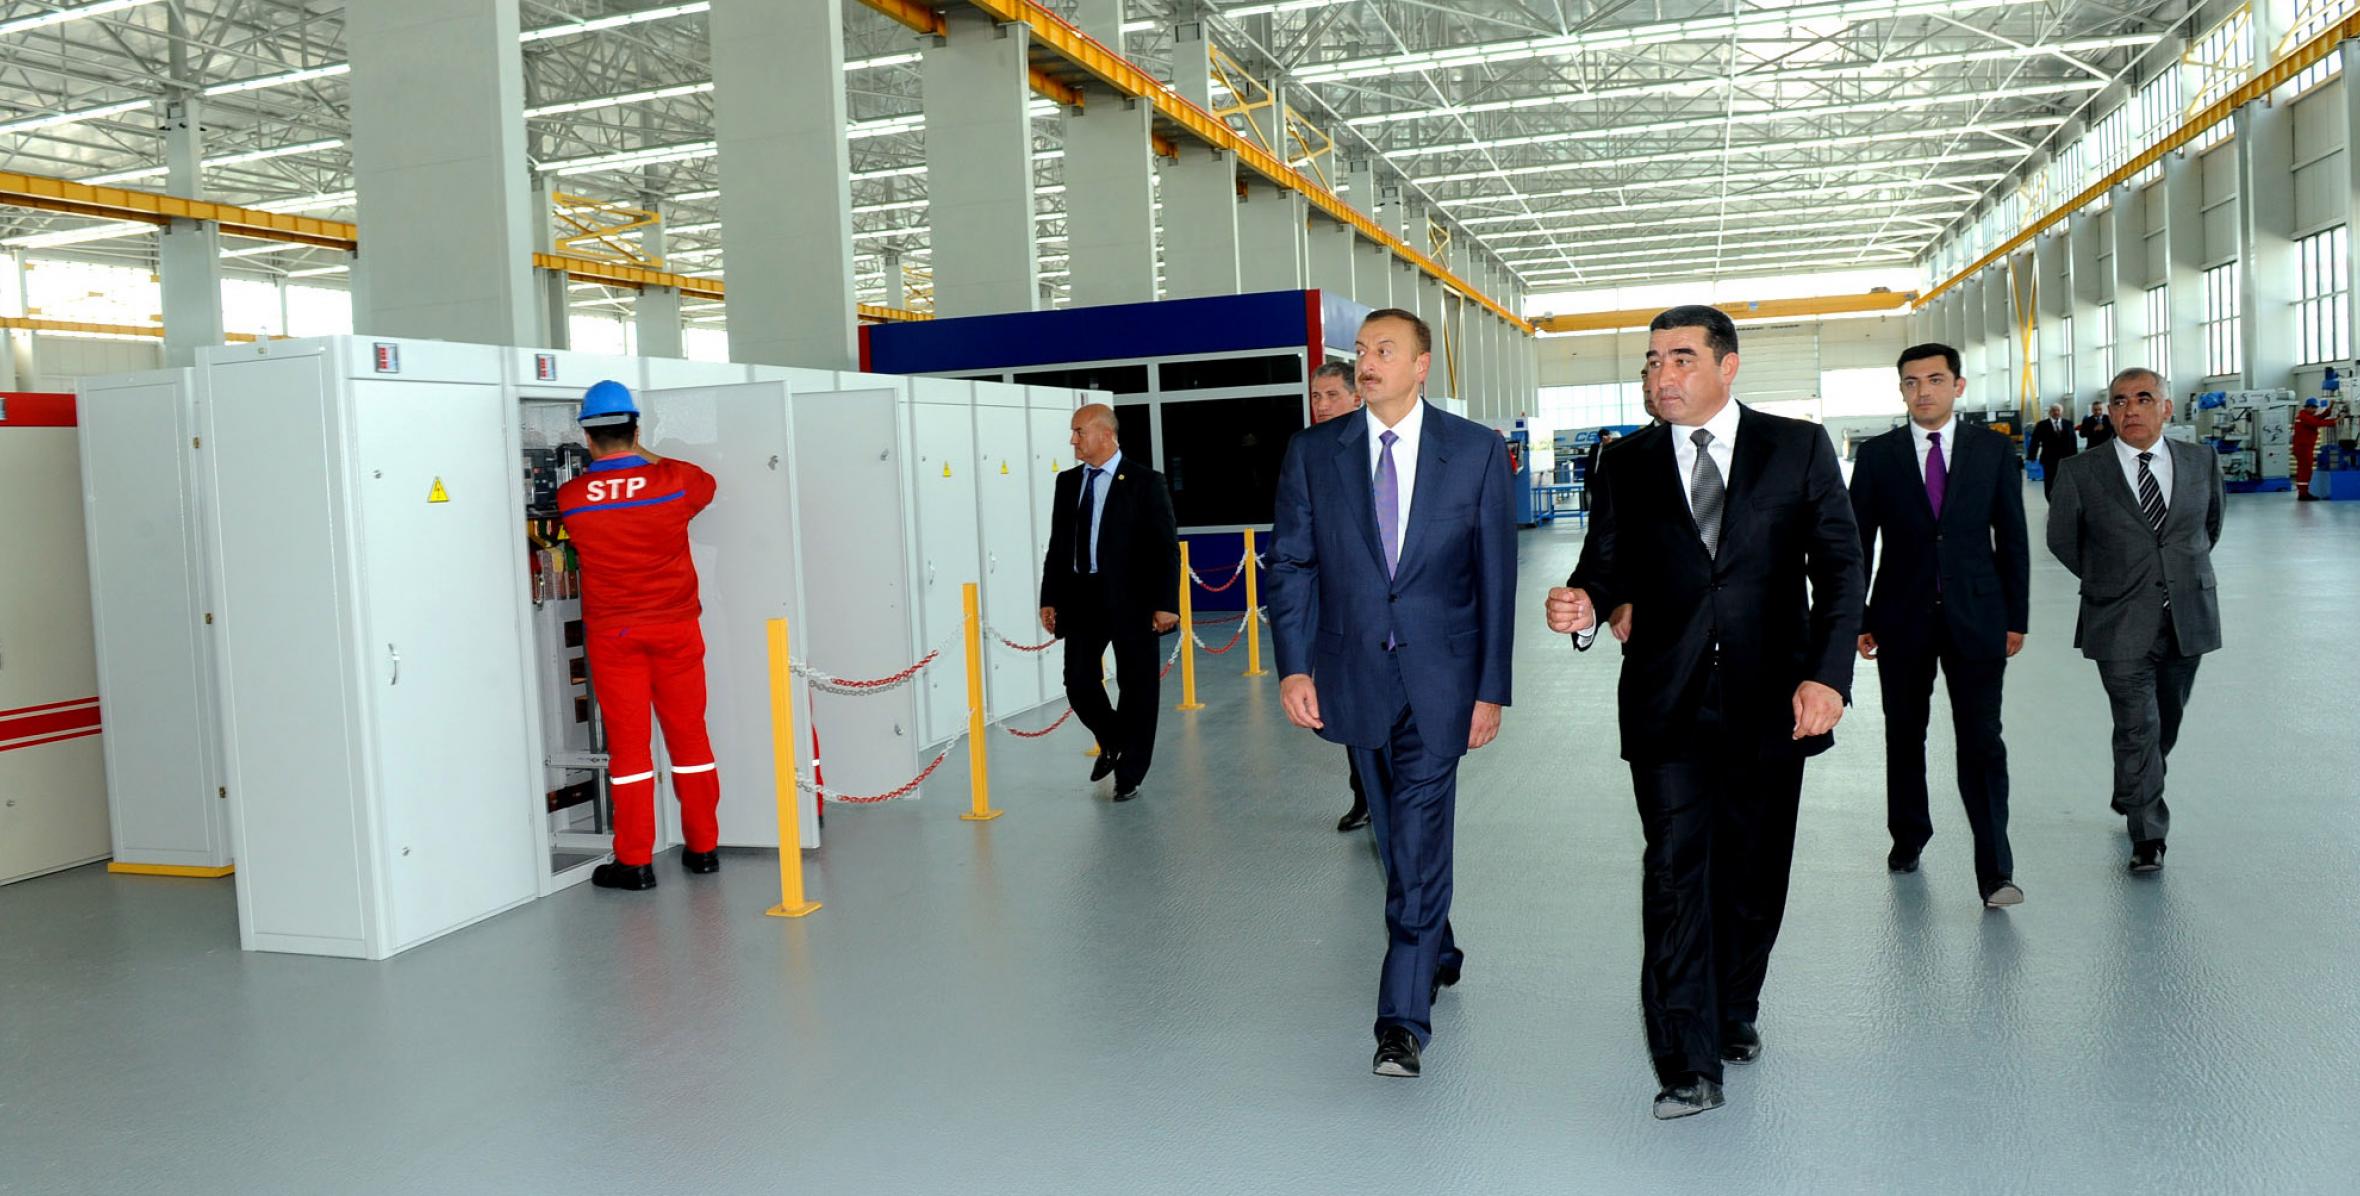 Ilham Aliyev reviewed the new enterprises established in the Sumgayit Technological Park